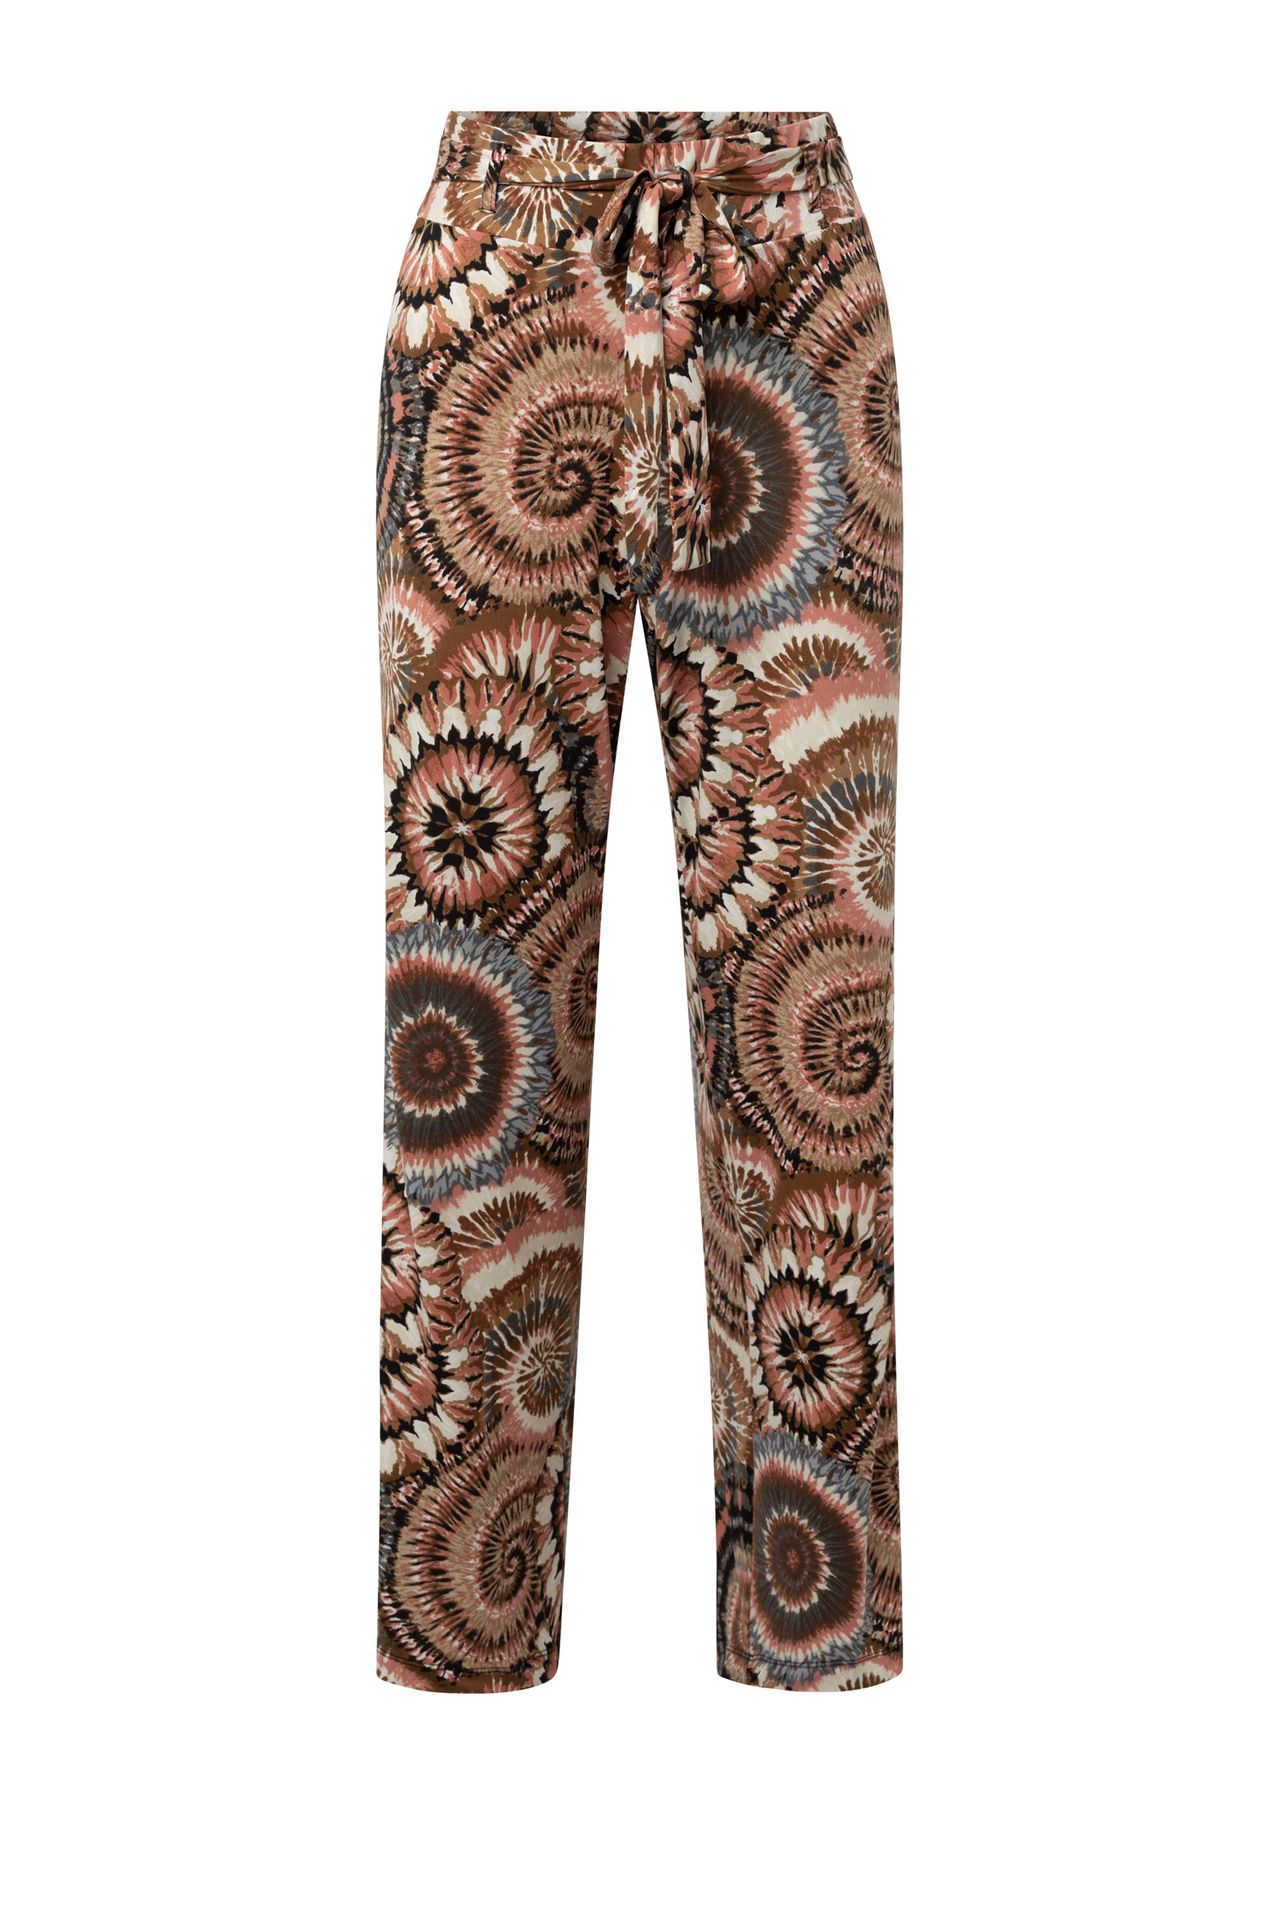 Norah Meerkleurige pantalon multicolor 214160-002